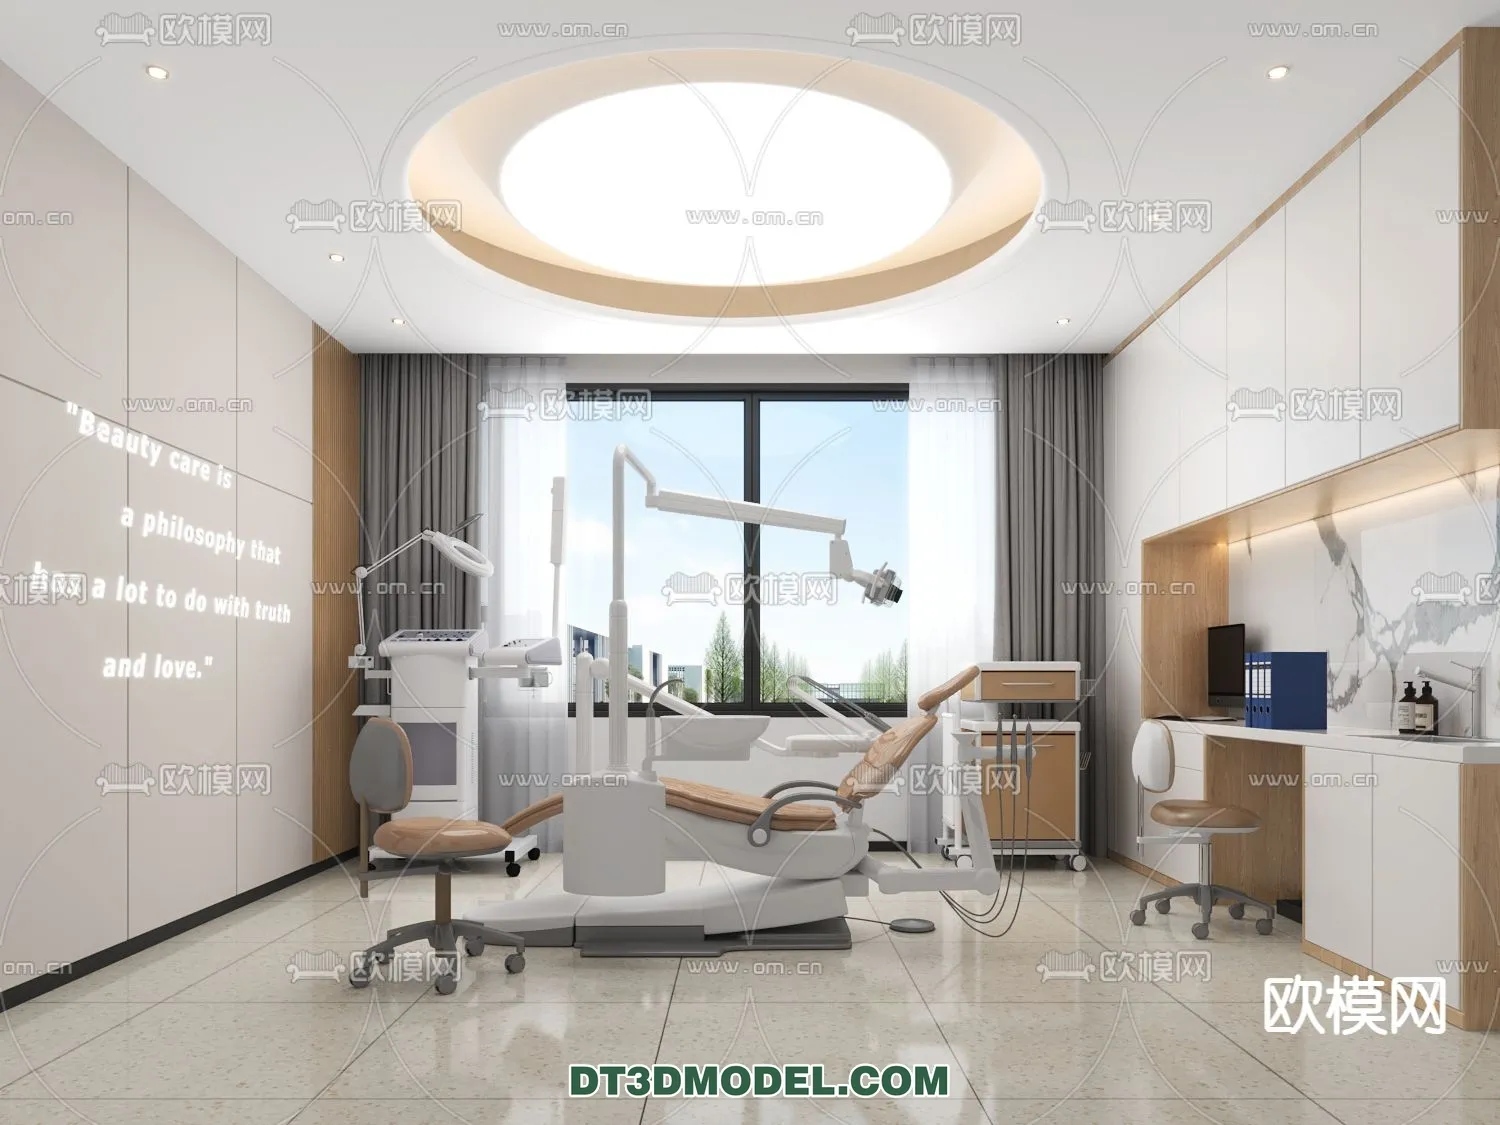 HOSPITAL 3D SCENES – MODERN – 0175